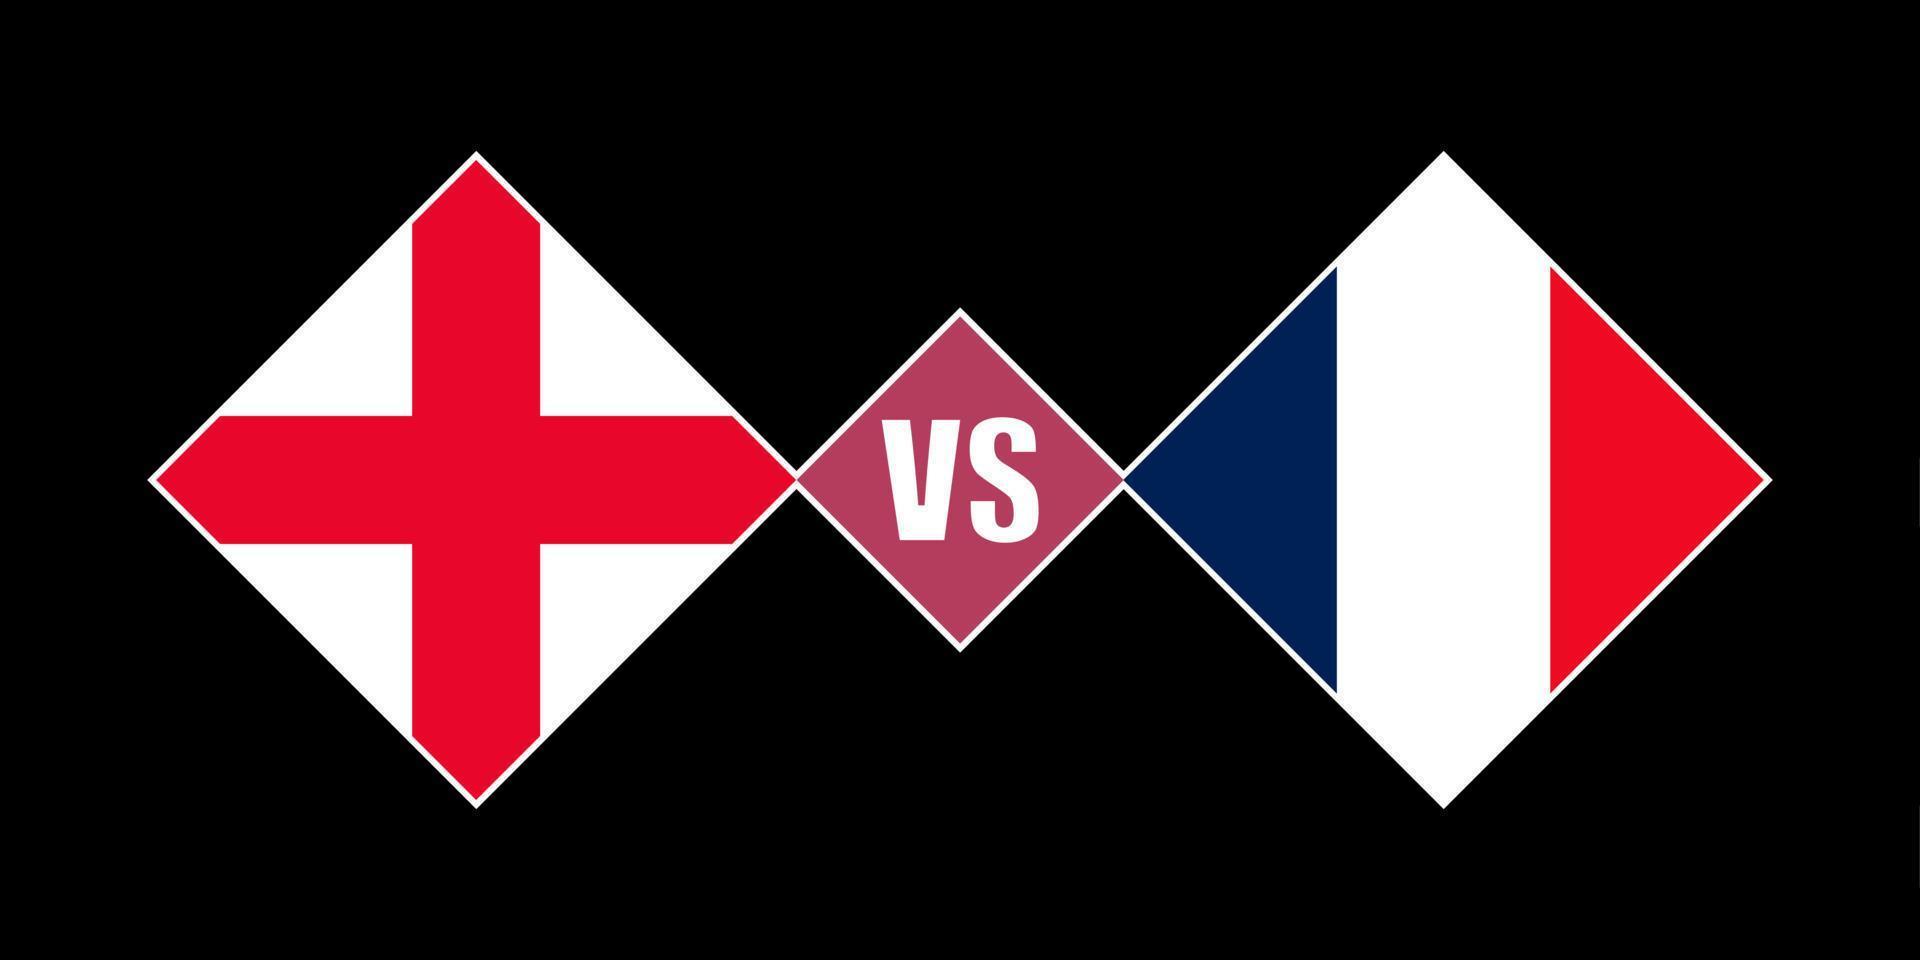 Engeland vs Frankrijk vlag concept. vector illustratie.